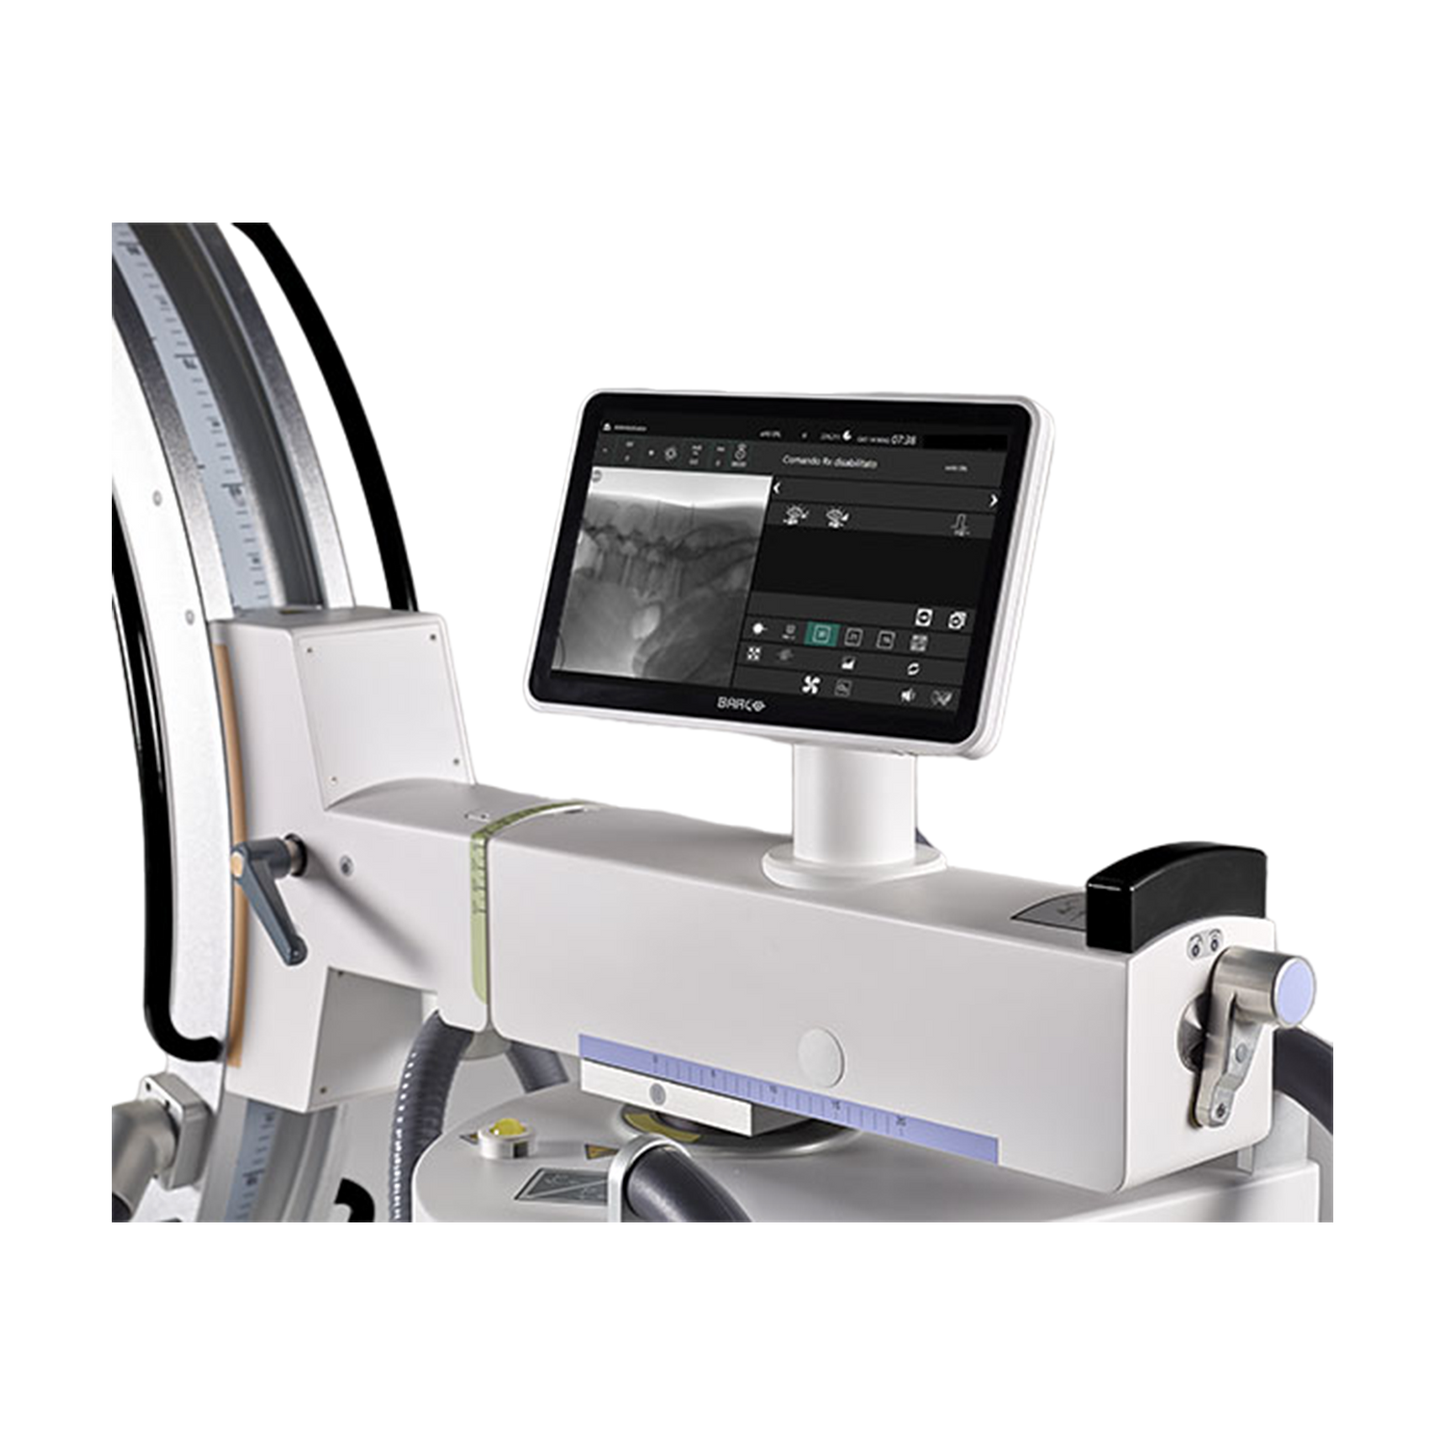 Fuji Persona C Mobile Fluoroscopy System